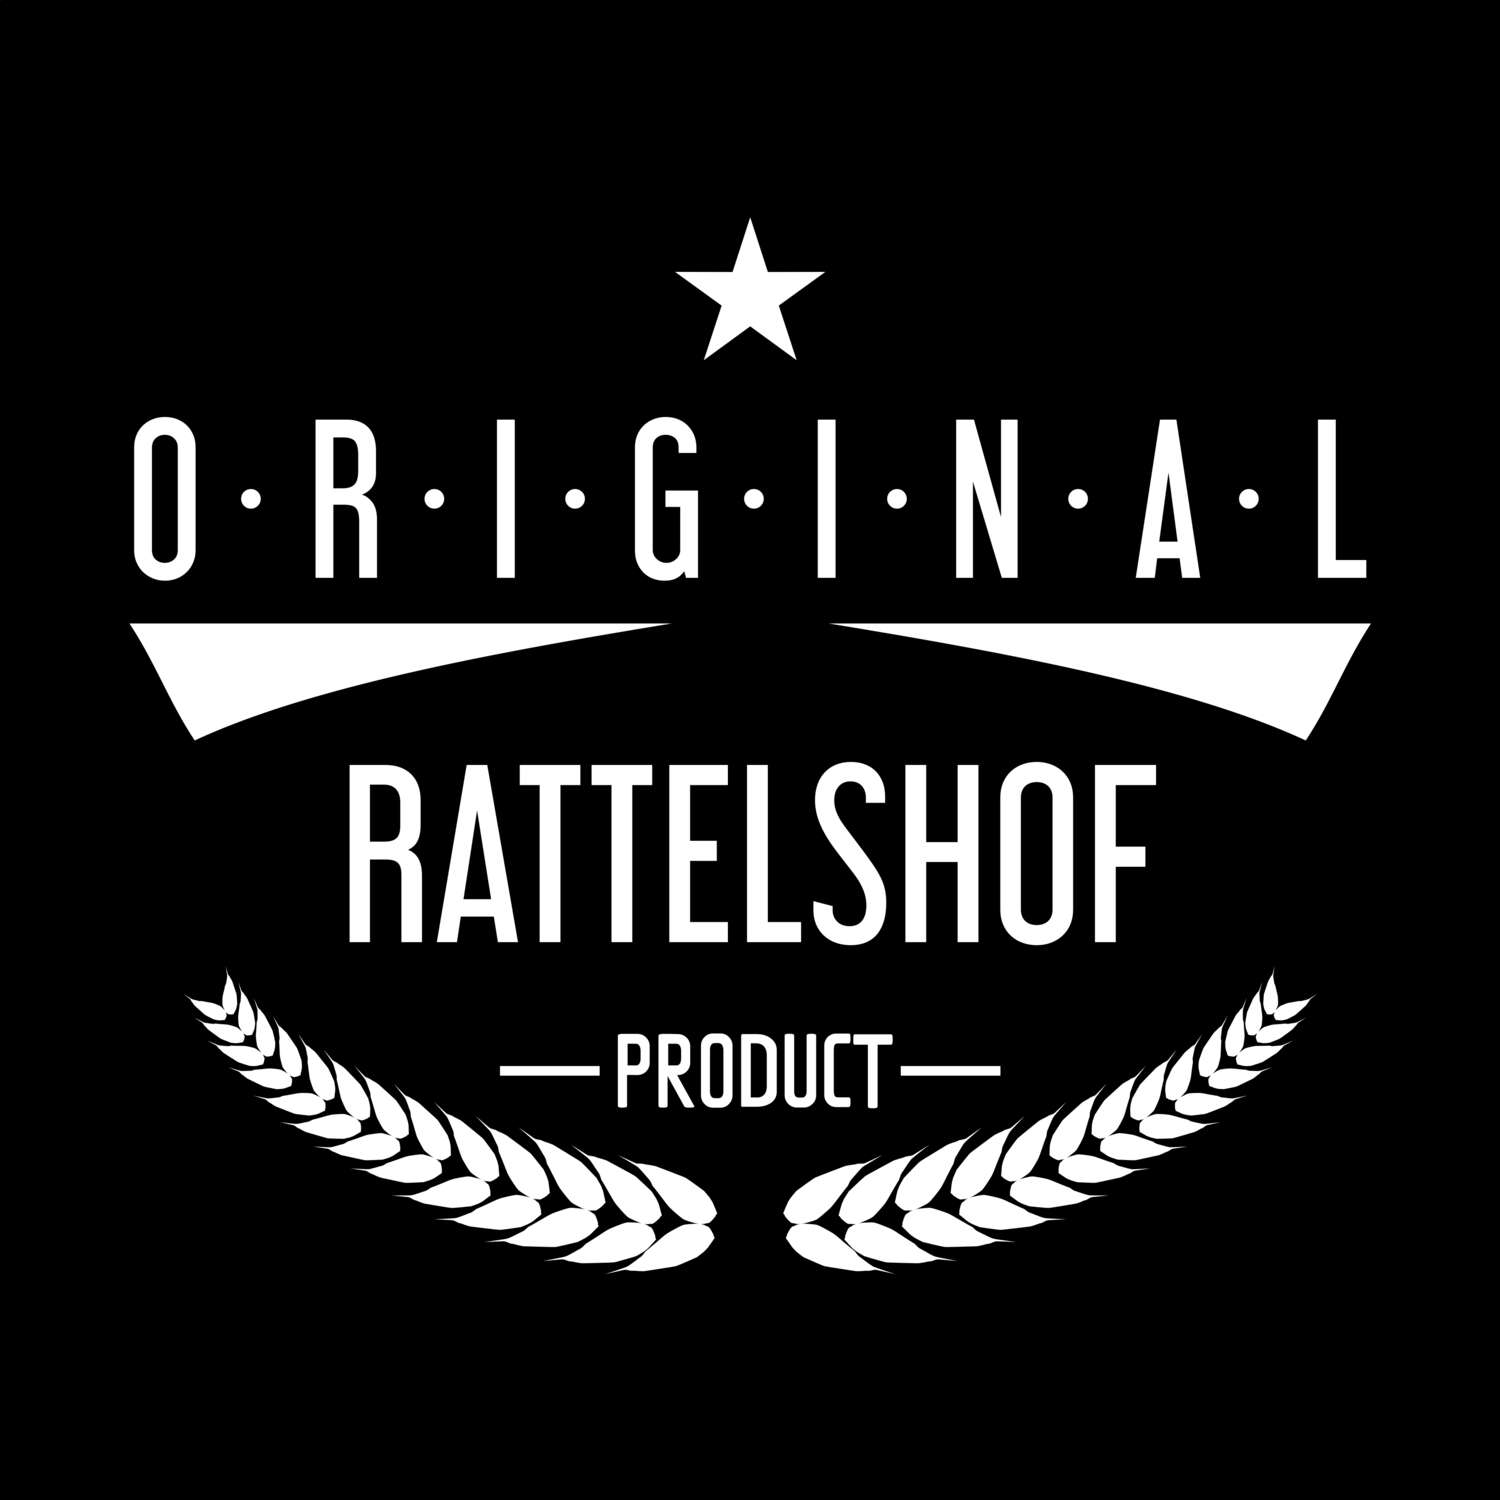 Rattelshof T-Shirt »Original Product«